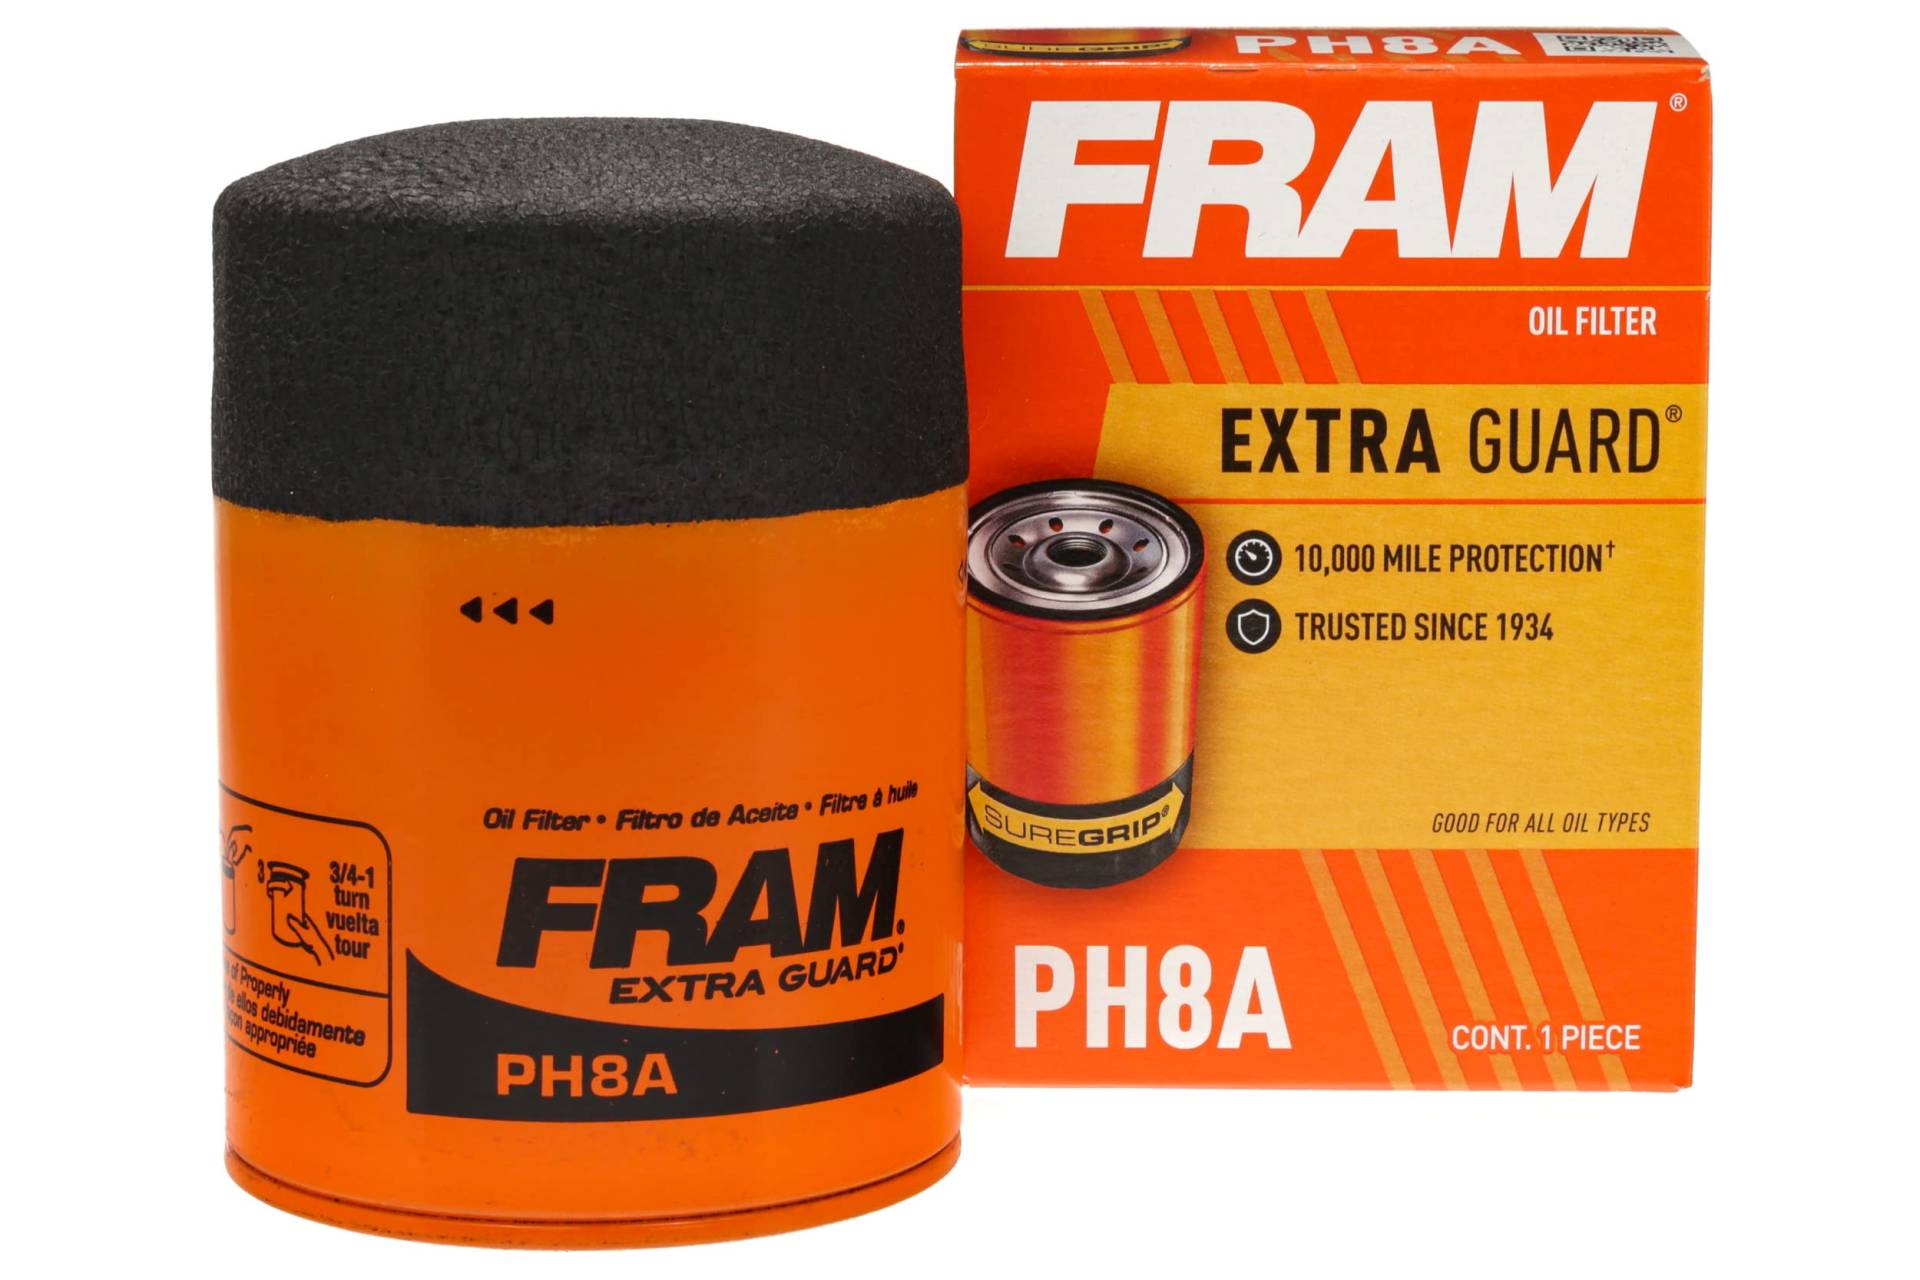 Fram GroupPH8AOil Filter für Ölfilter von Fram